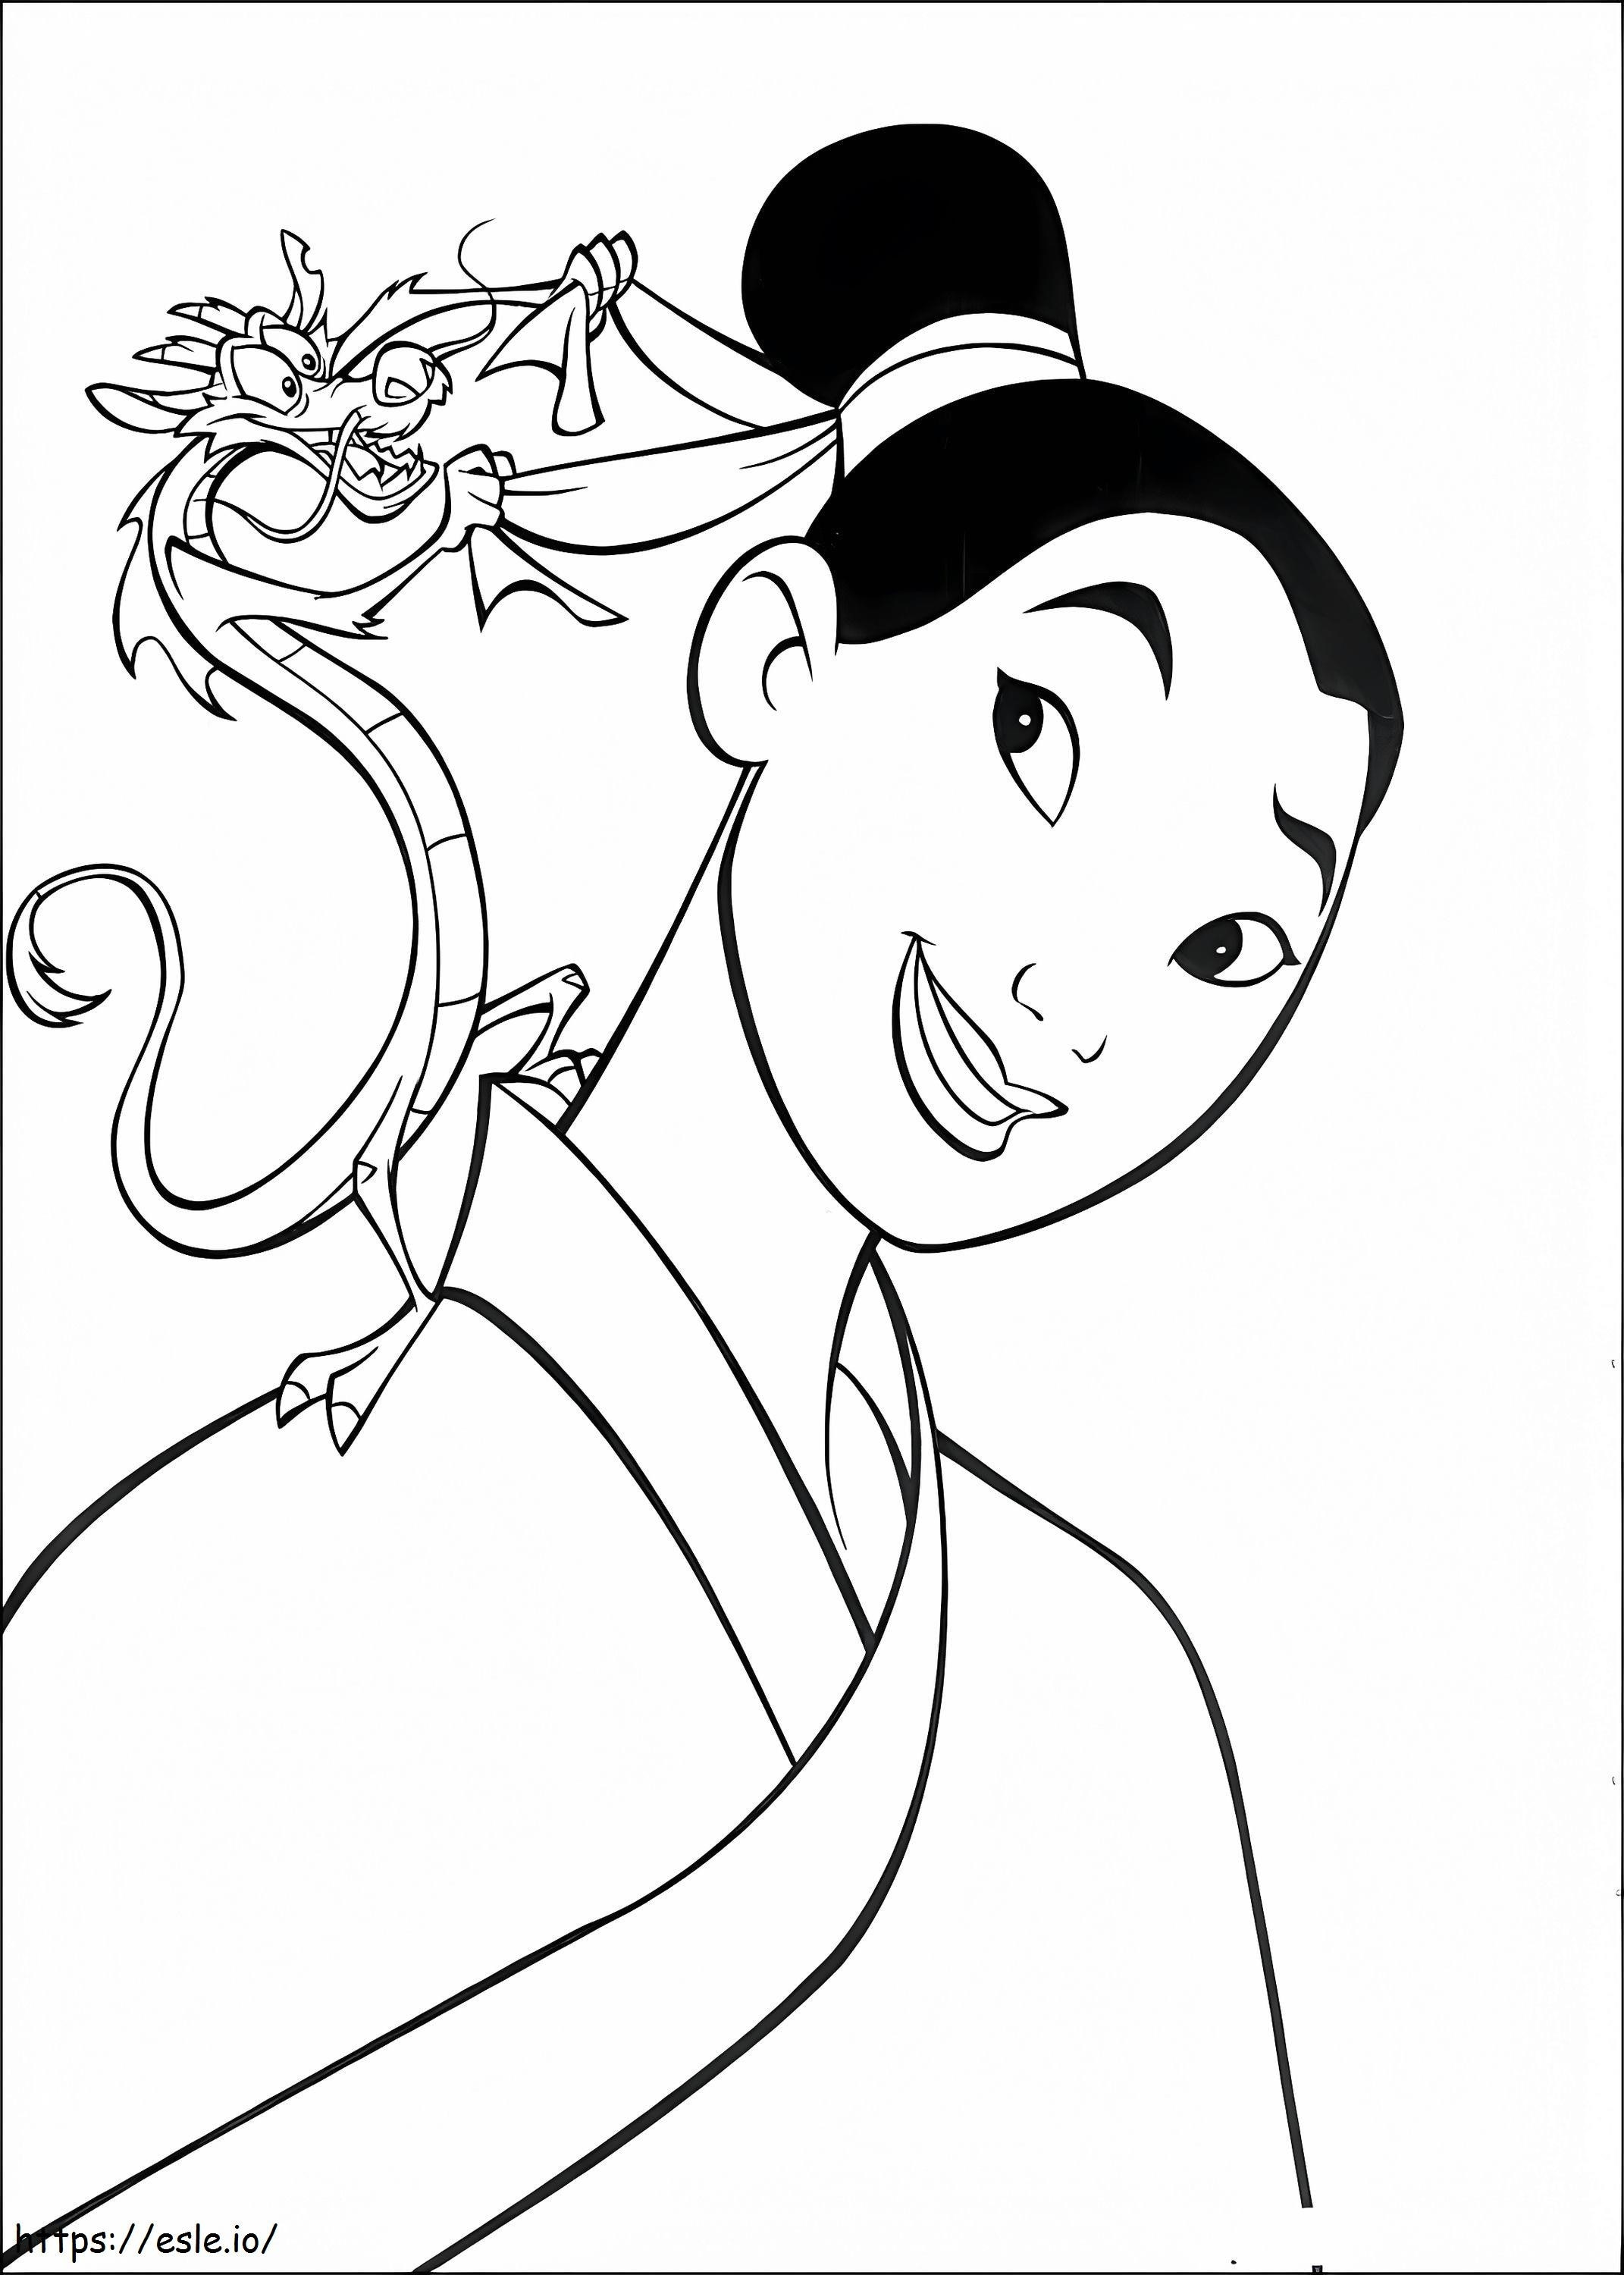 Mushu Helps Mulan coloring page